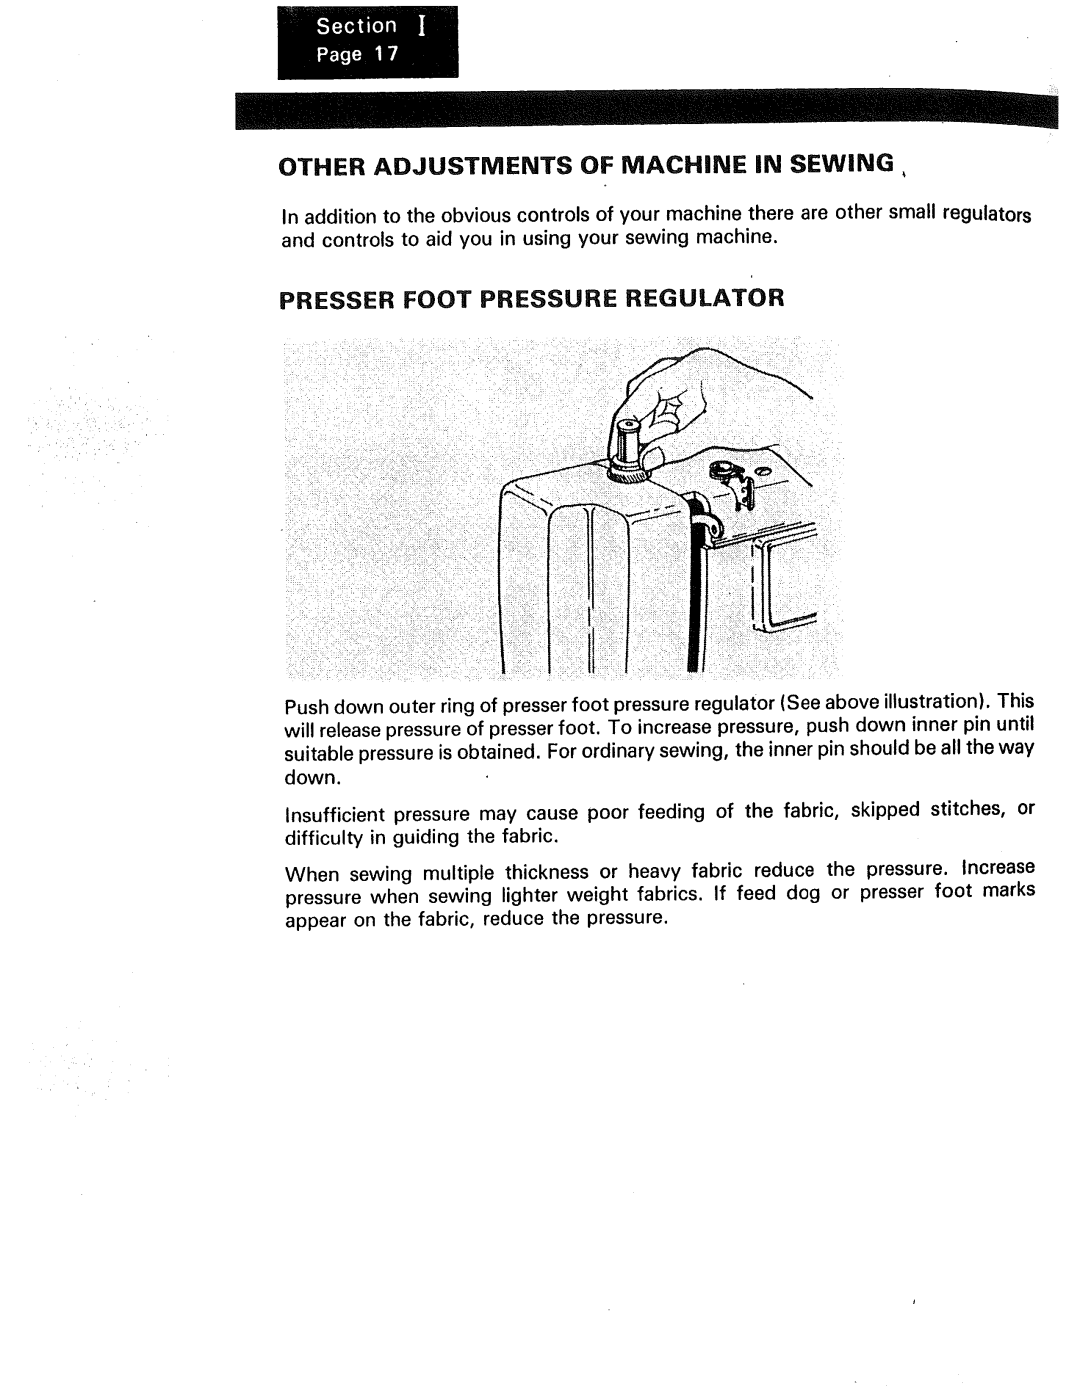 Kenmore 1240, 1230, 1250 manual Presser Foot Pressure Regulator, Other Adjustments Of Machine In Sewing 